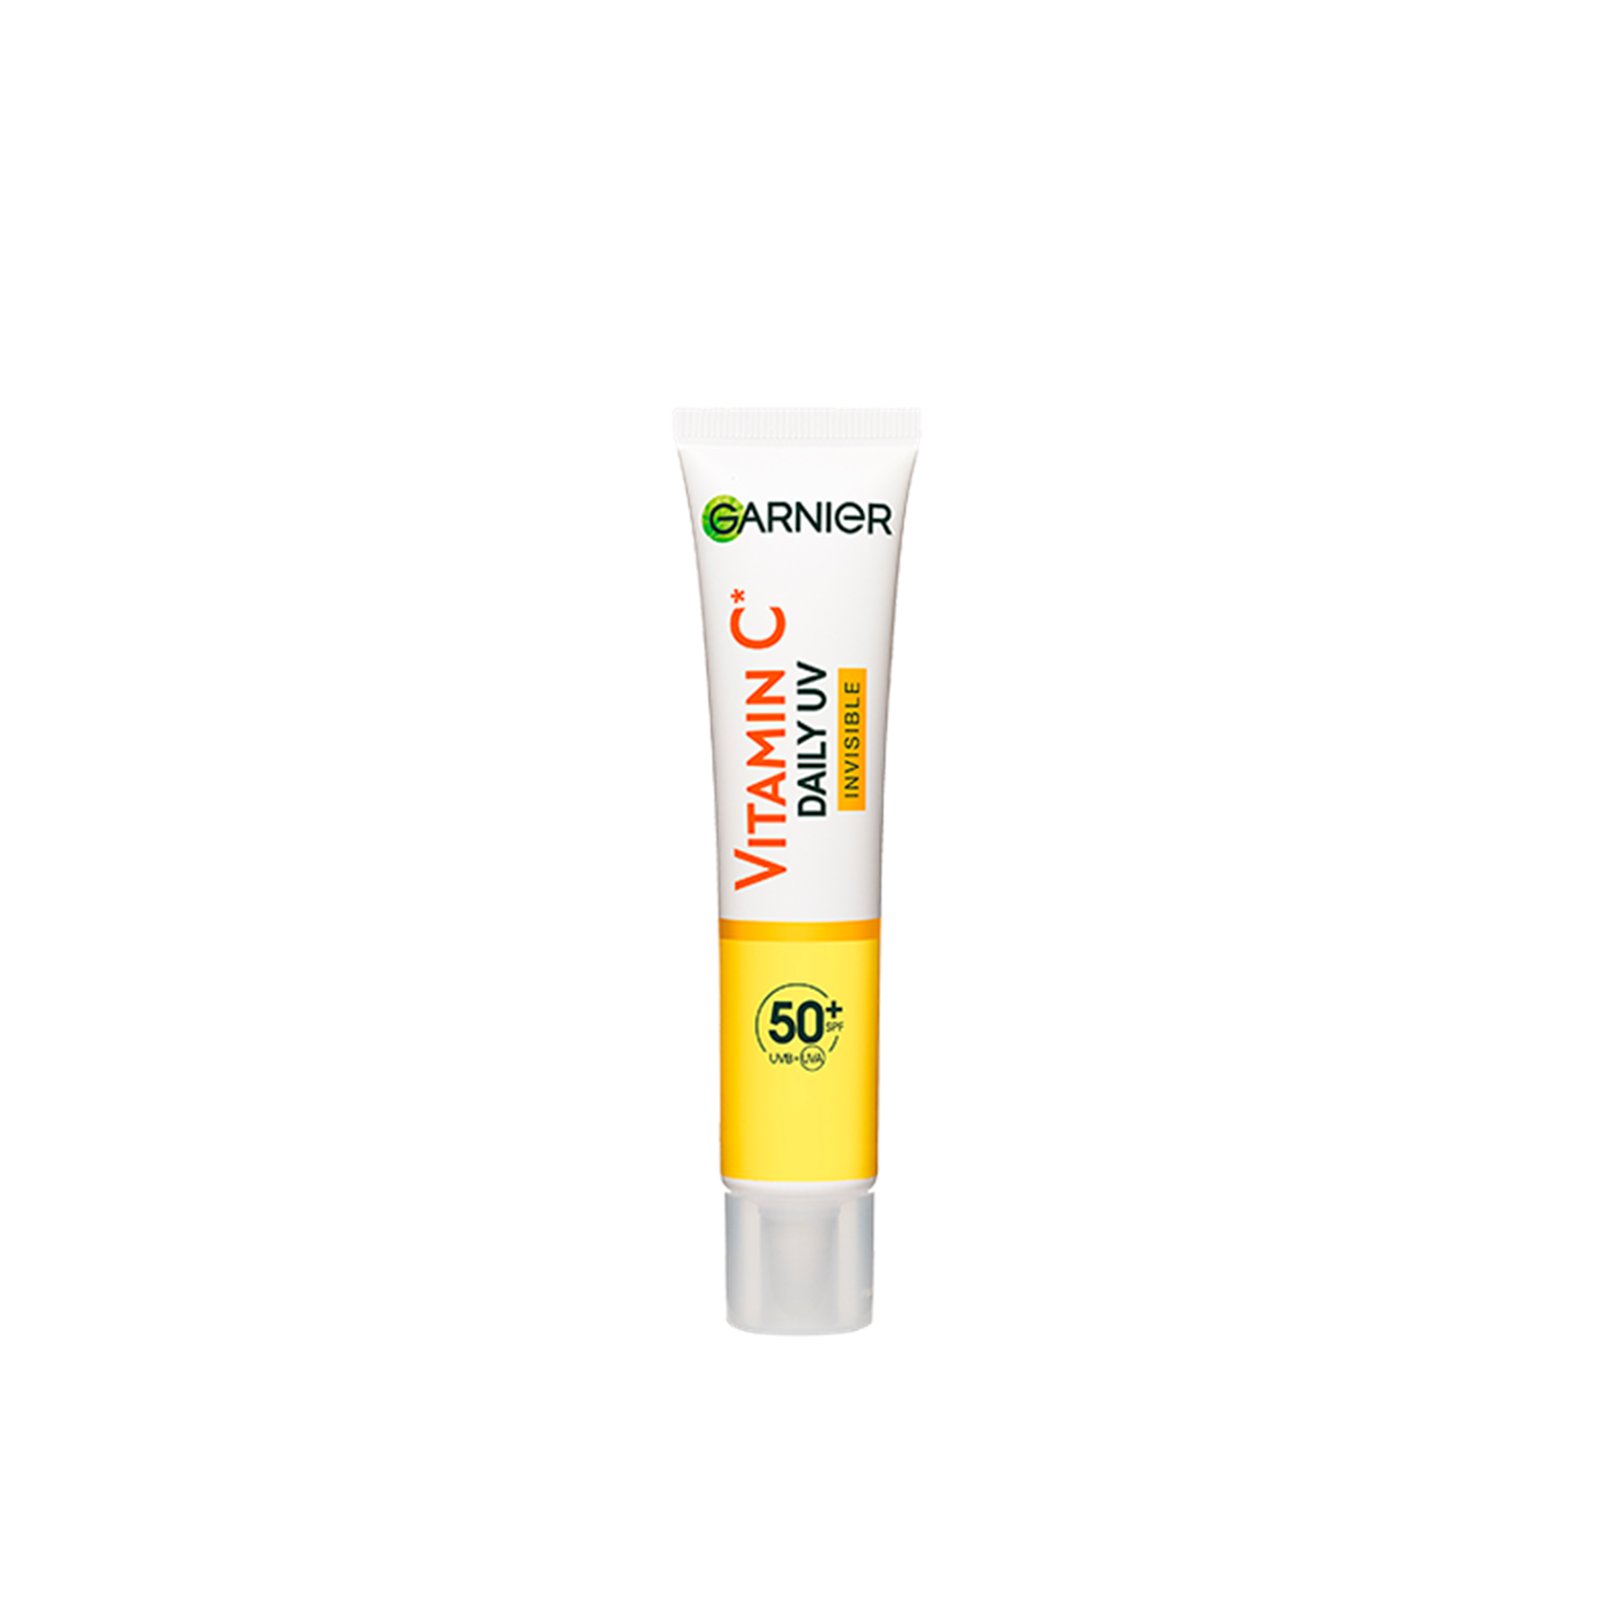 Garnier Skin Active Vitamin C Daily UV Brightening Fluid Invisible SPF50+ 40ml